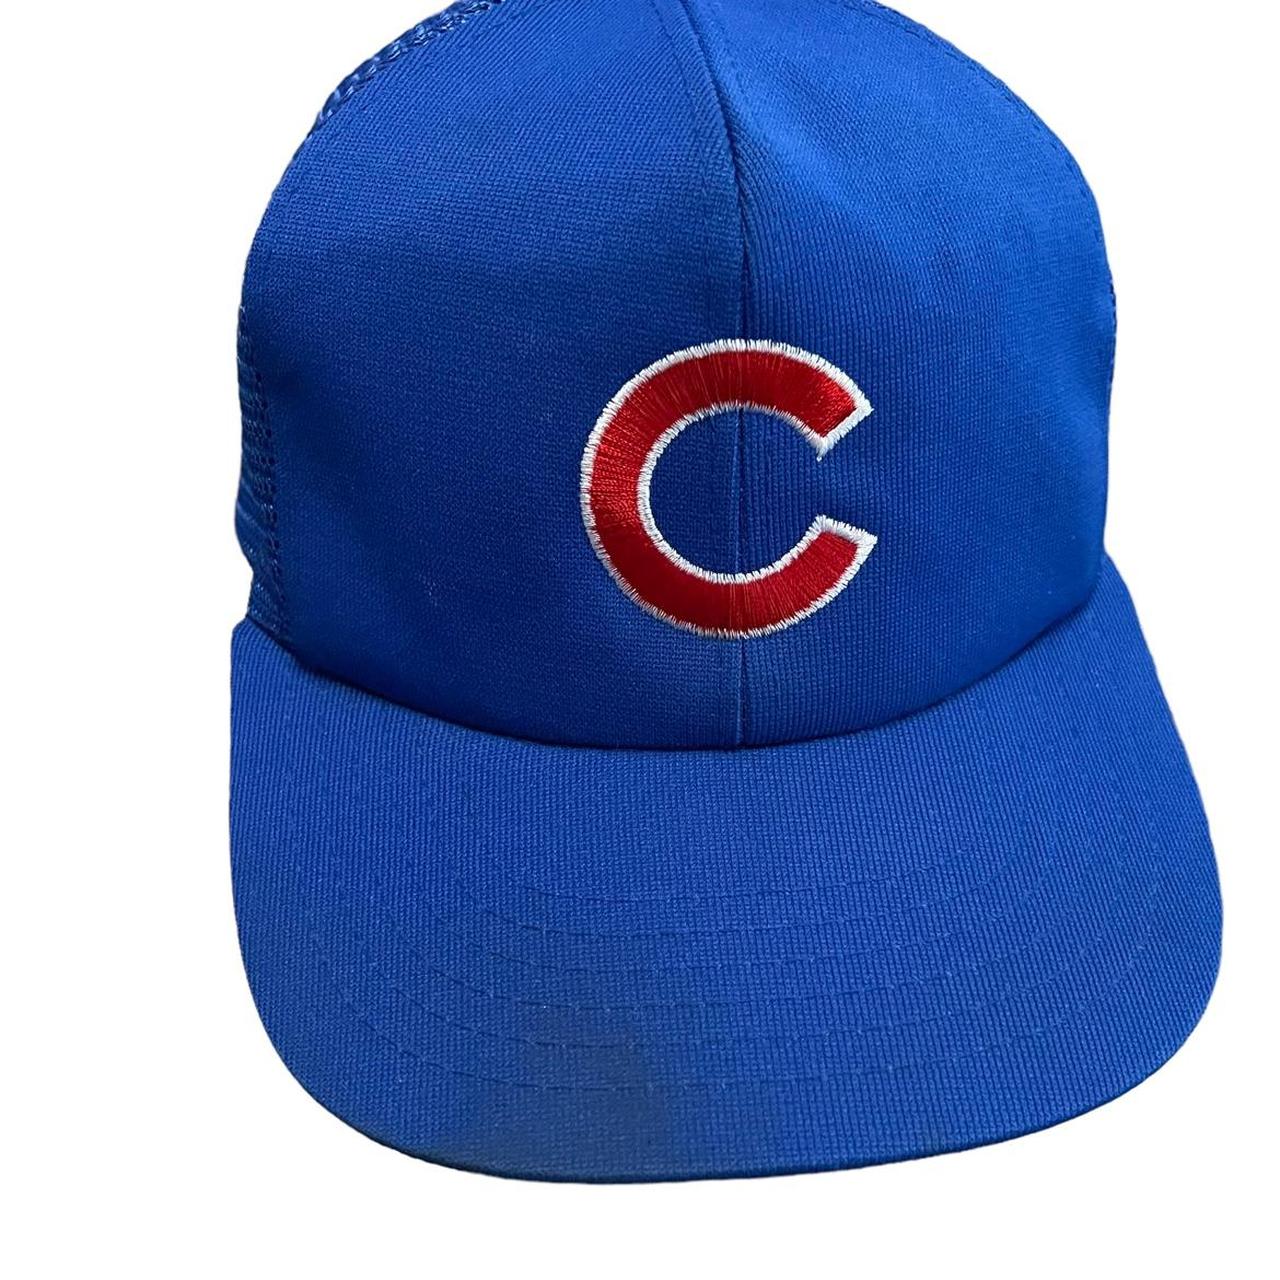 Vintage 80's 90's Chicago Cubs Snapback Trucker Hat 